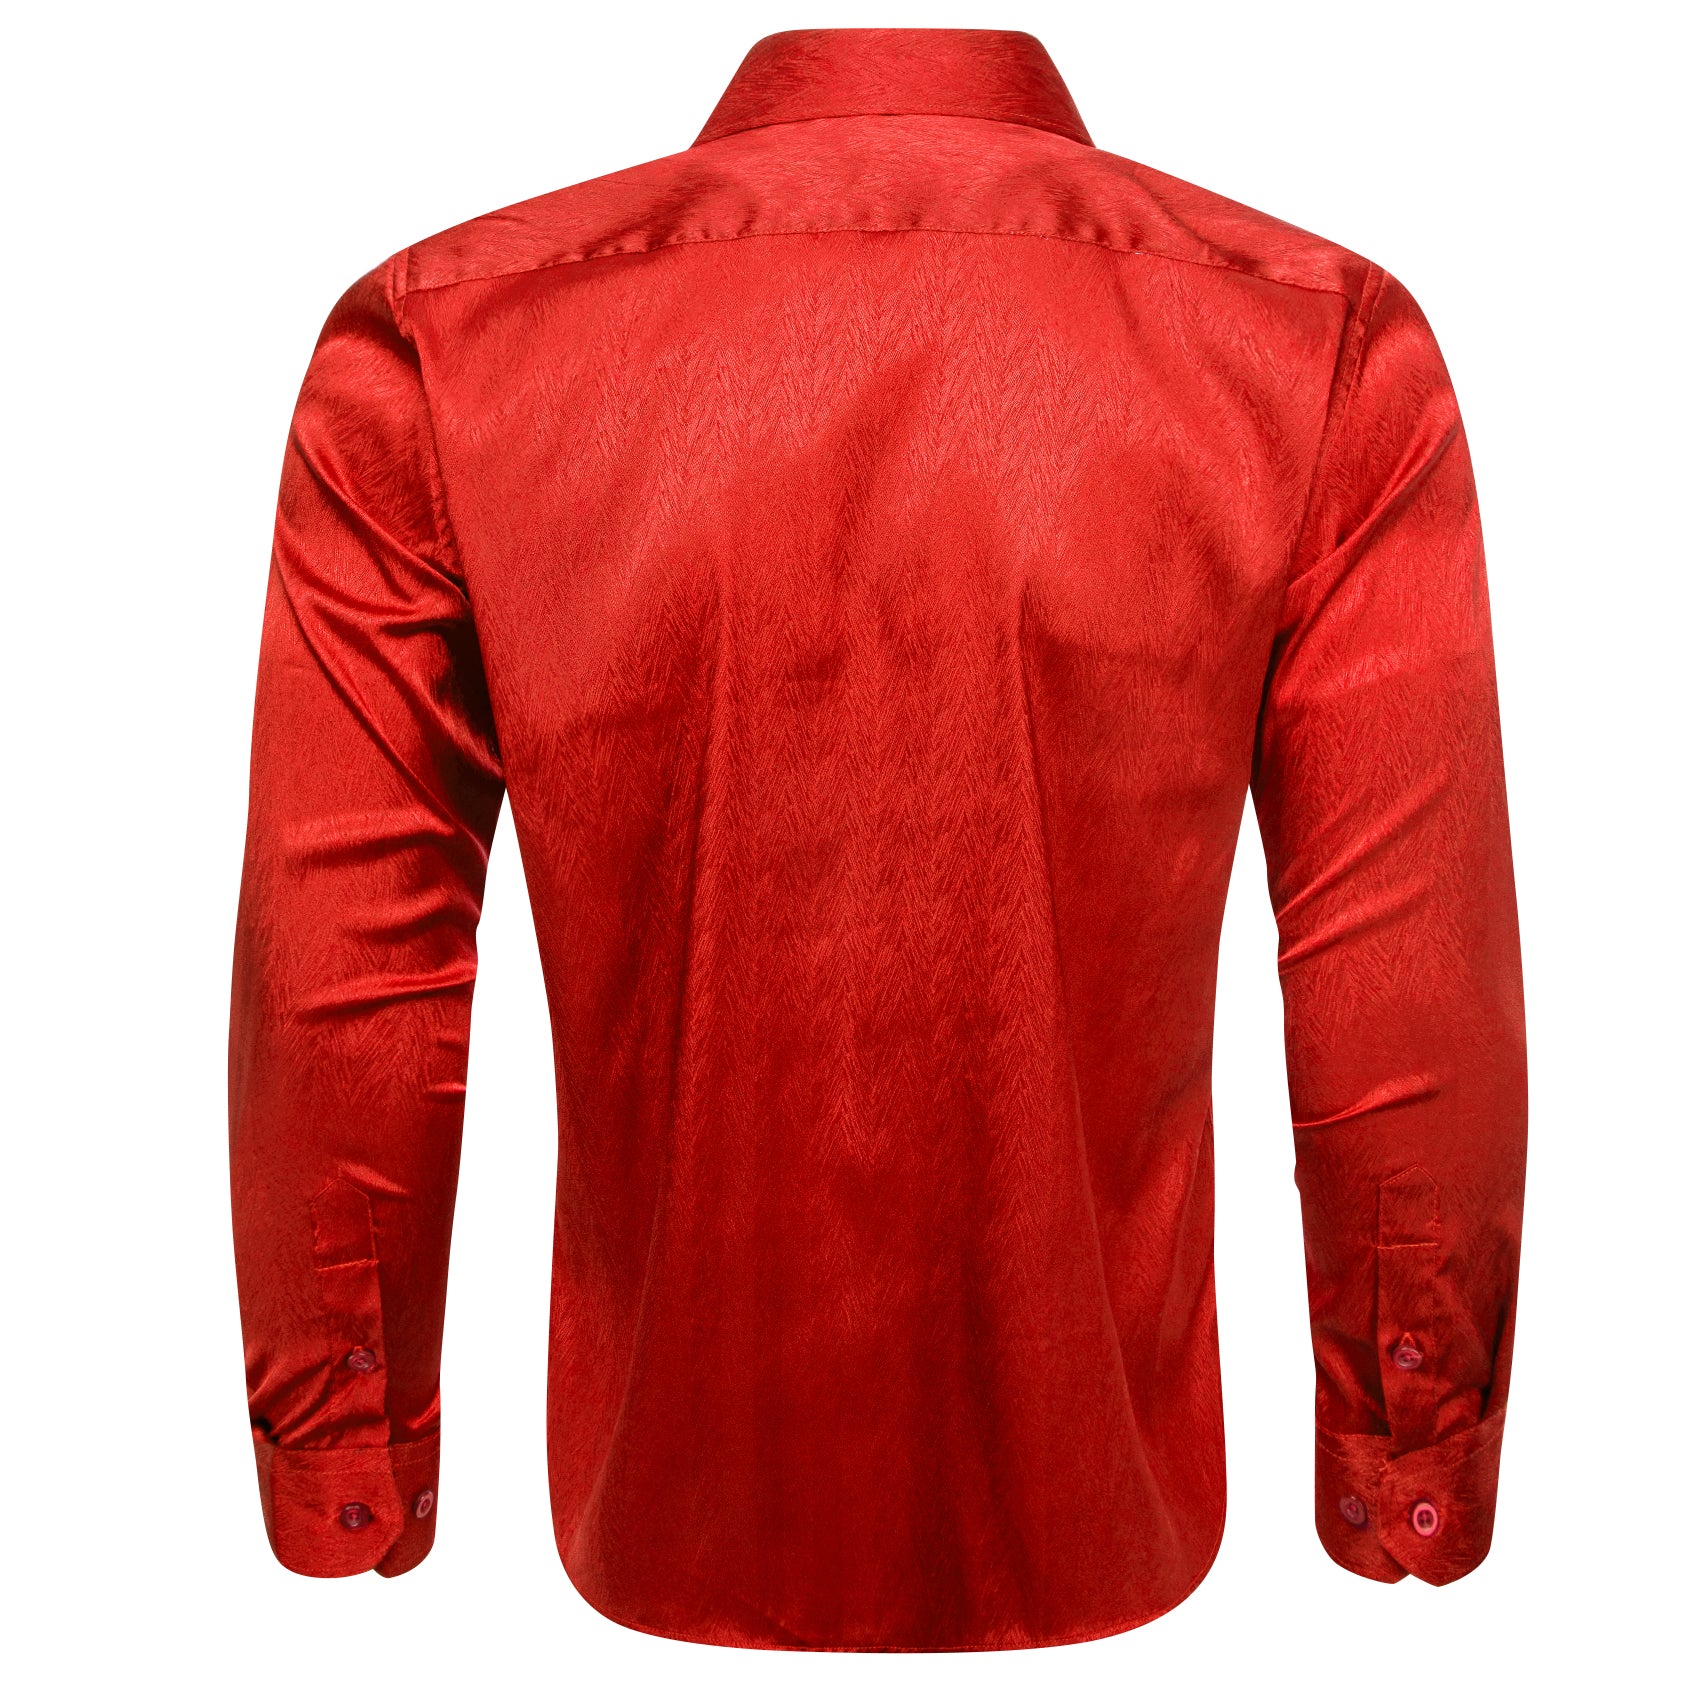 Barry.wang Strong Red Solid Silk Men's Shirt